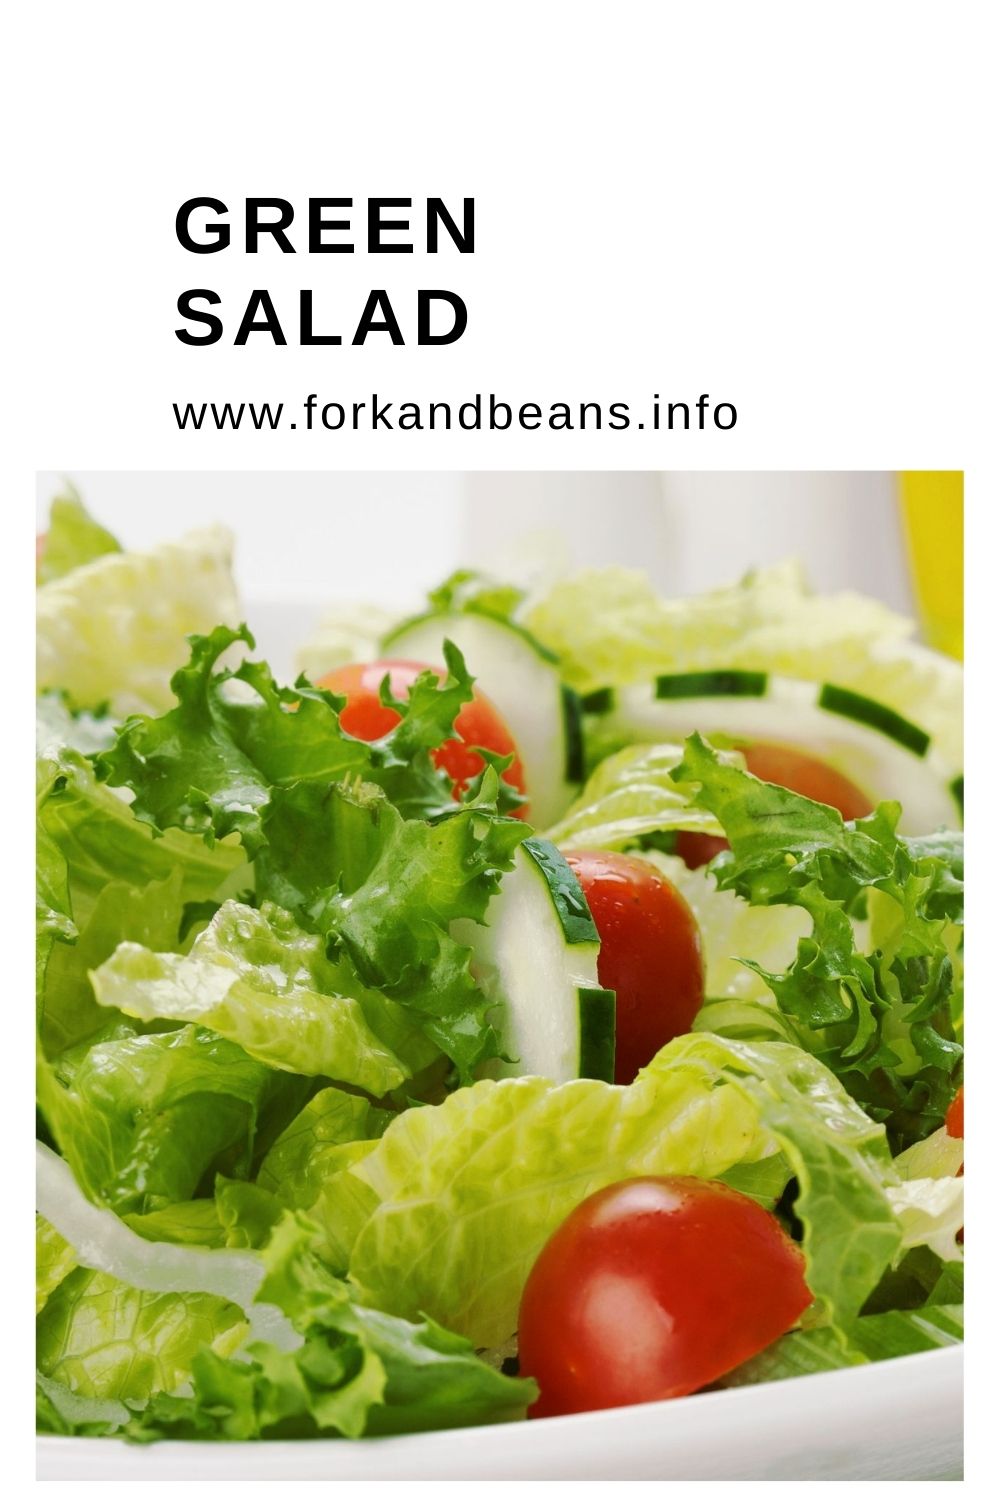 The Basic Formula for Green Salads